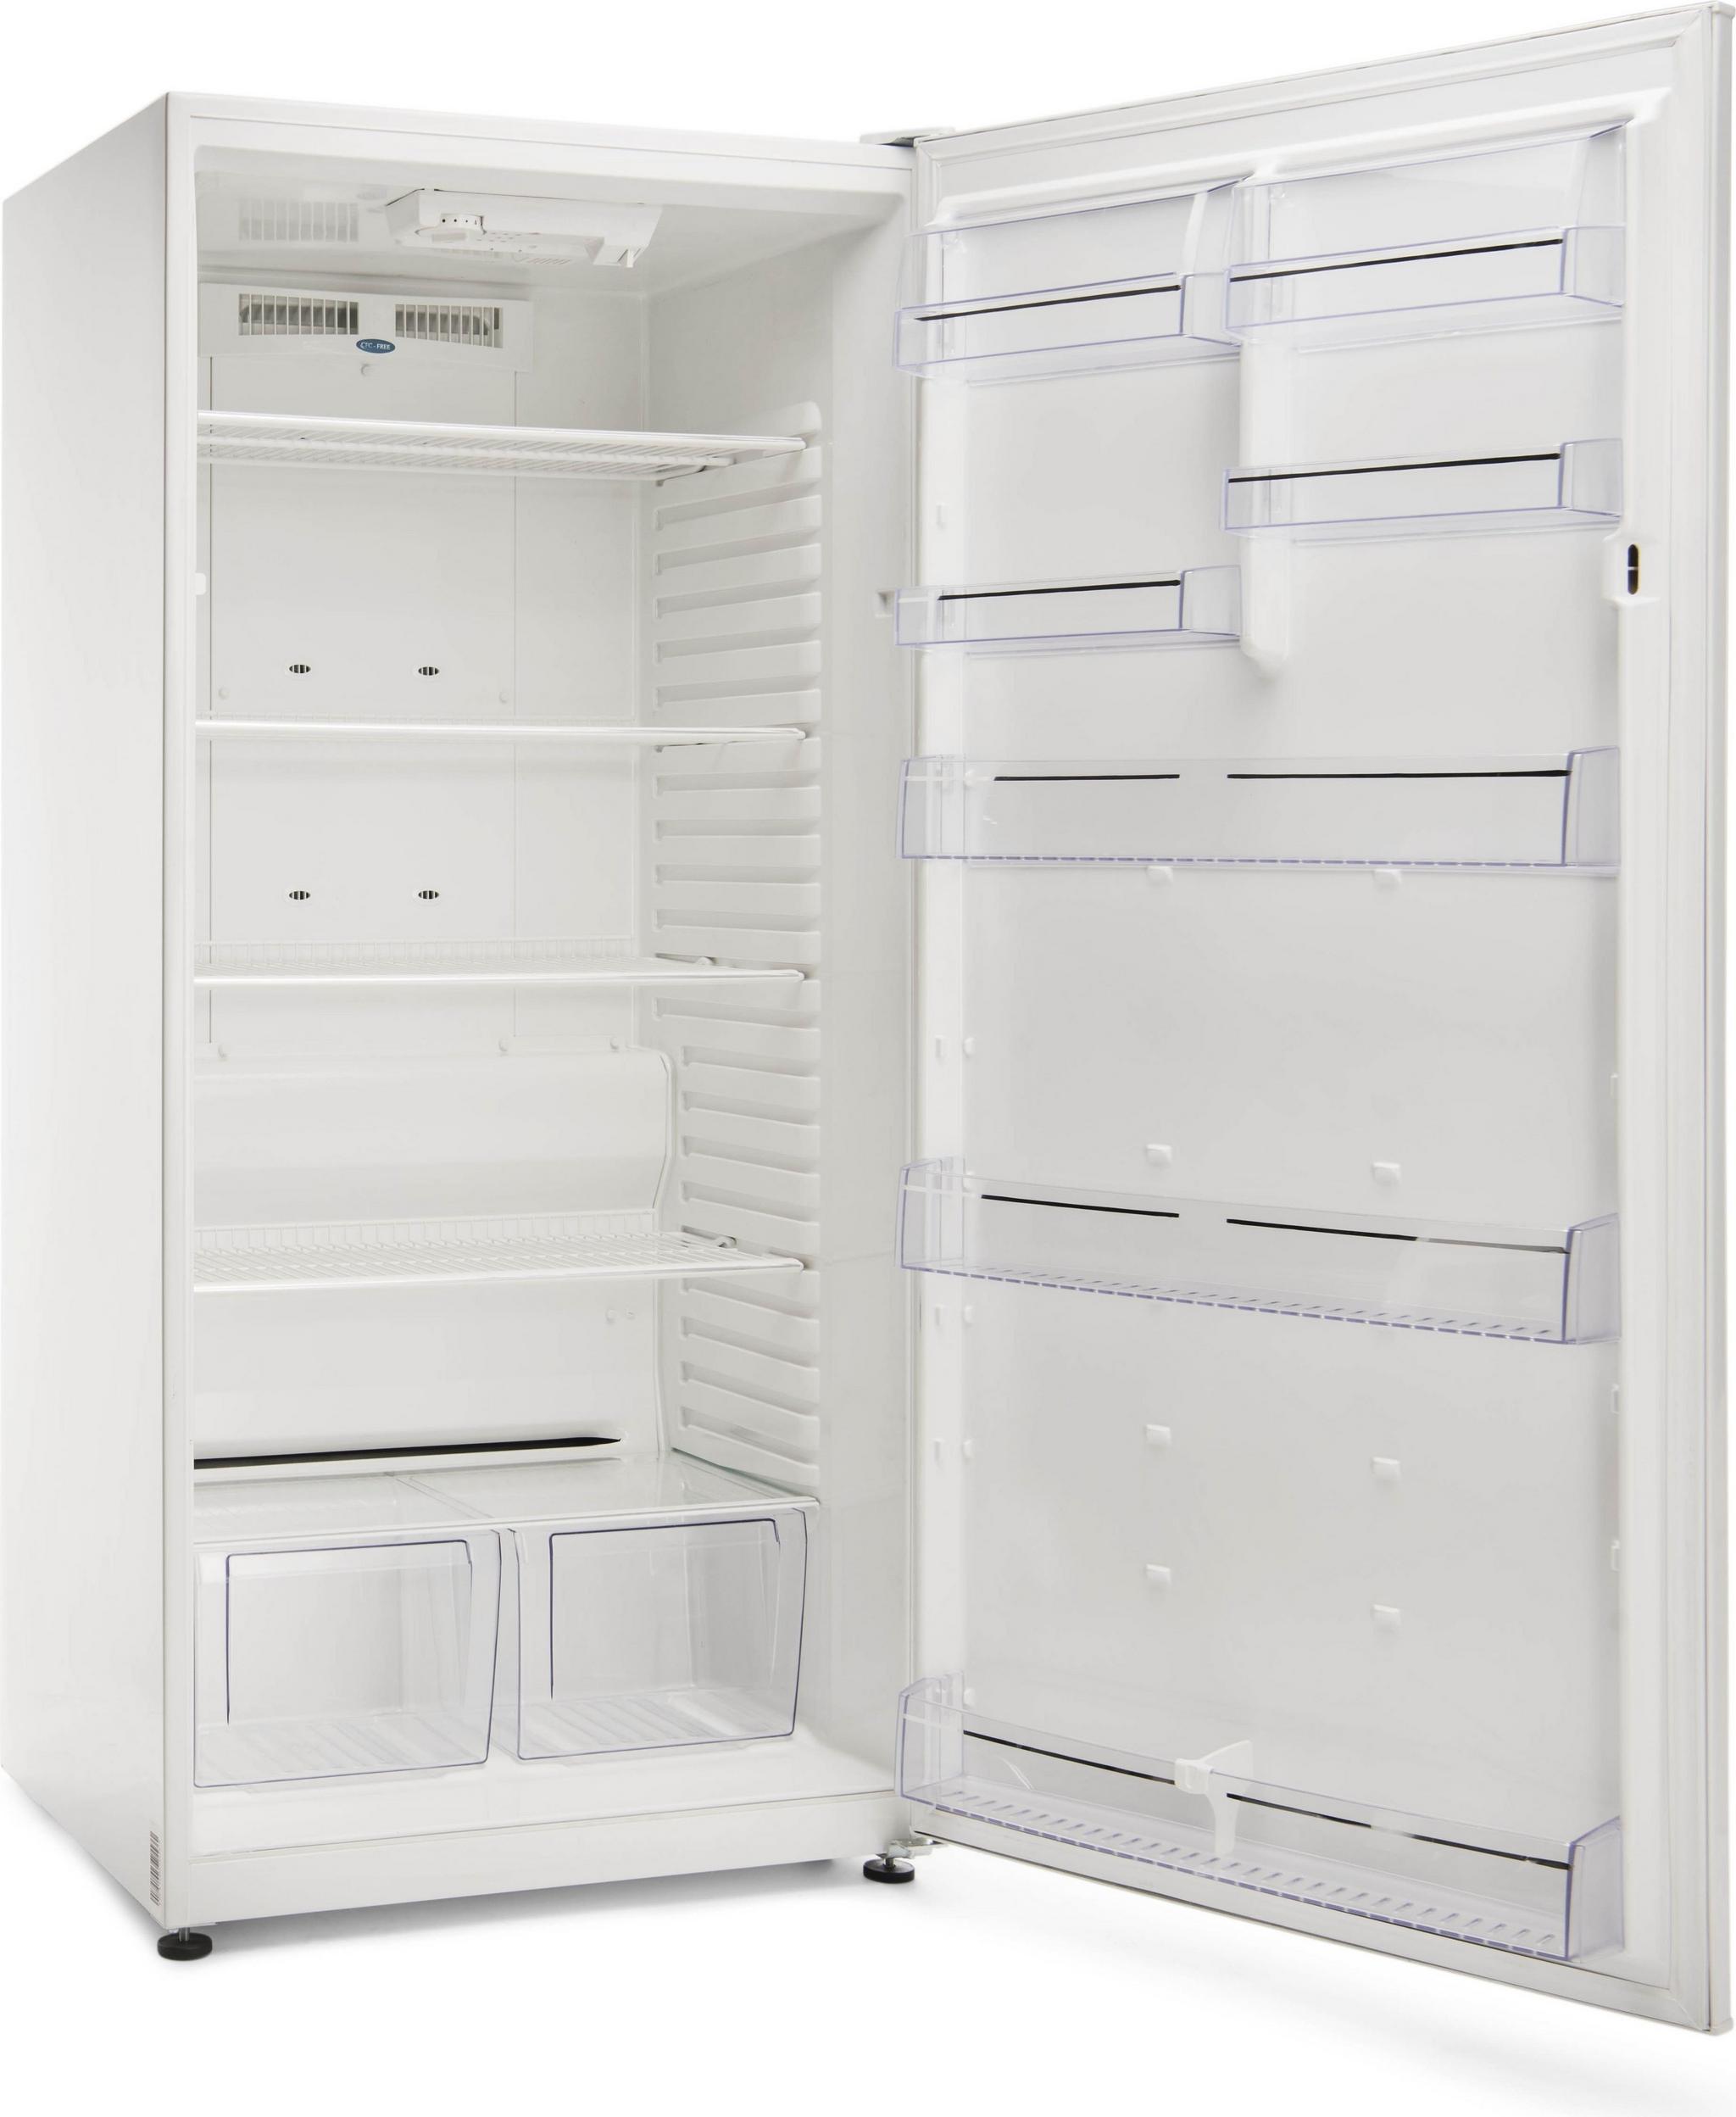 Wansa 19CFT Single Door Refrigerator (WROW-650-NFWTS3) - White